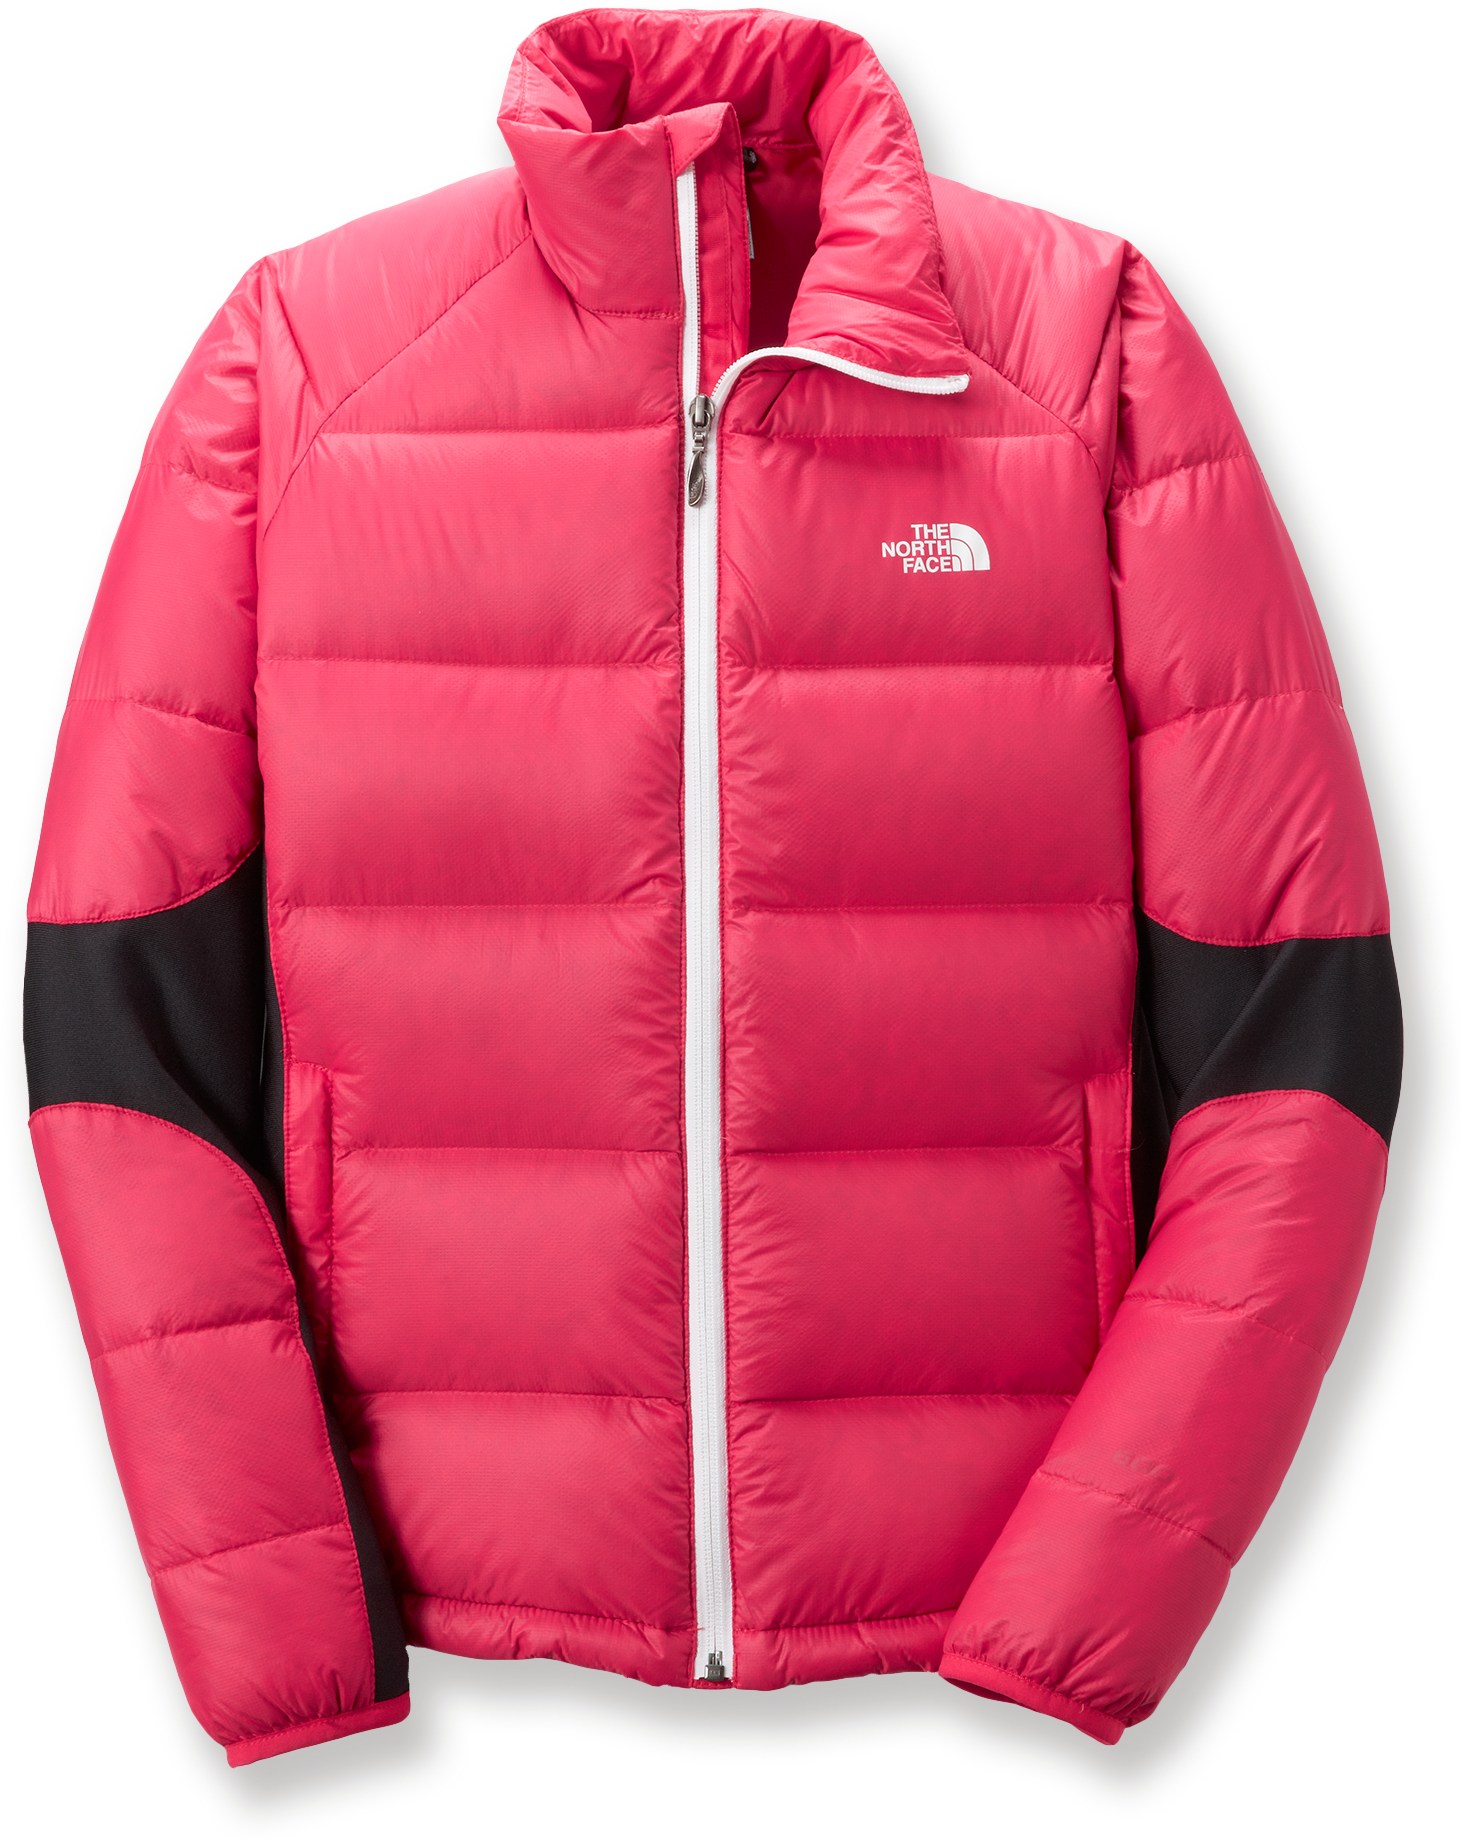 REI North Face Women's Crimptastic Hybrid Down Jacket - $98.73